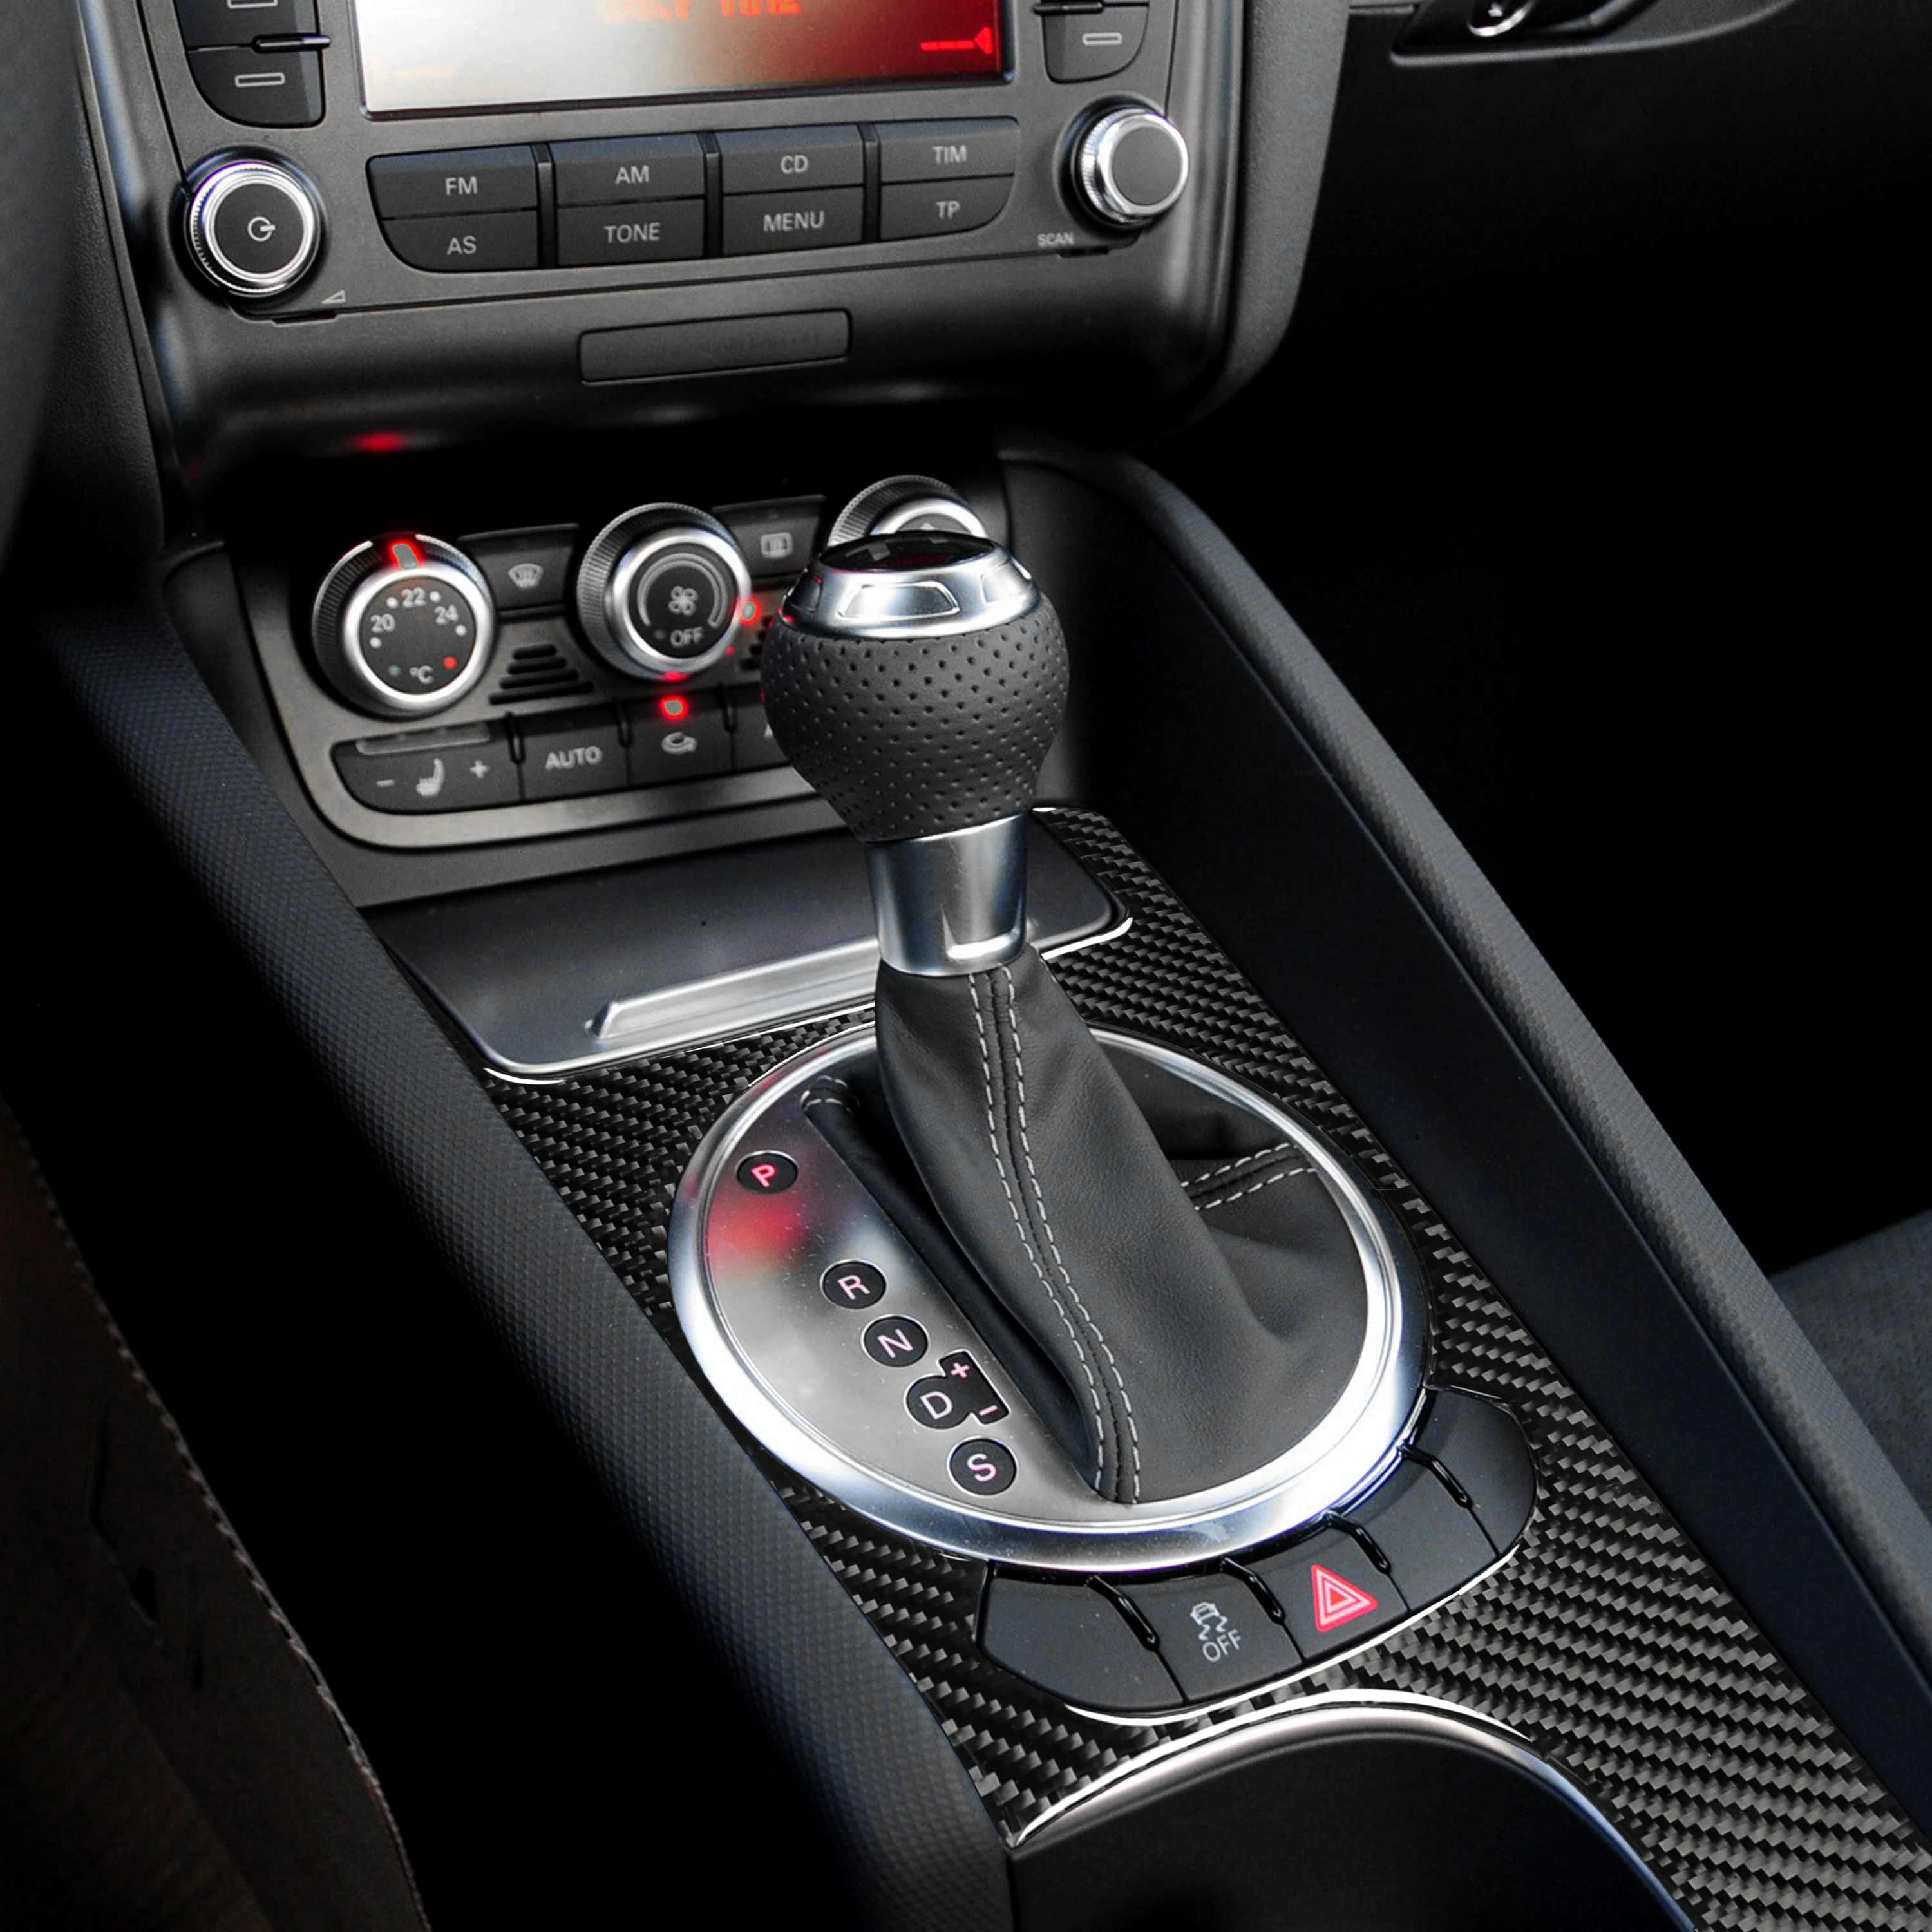 1pcs Real Carbon Fiber Sticker Central Control Gear Panel Big Trim fit for Audi TT 8n 8J MK123 TTRS 2008-2014 Models Accessories